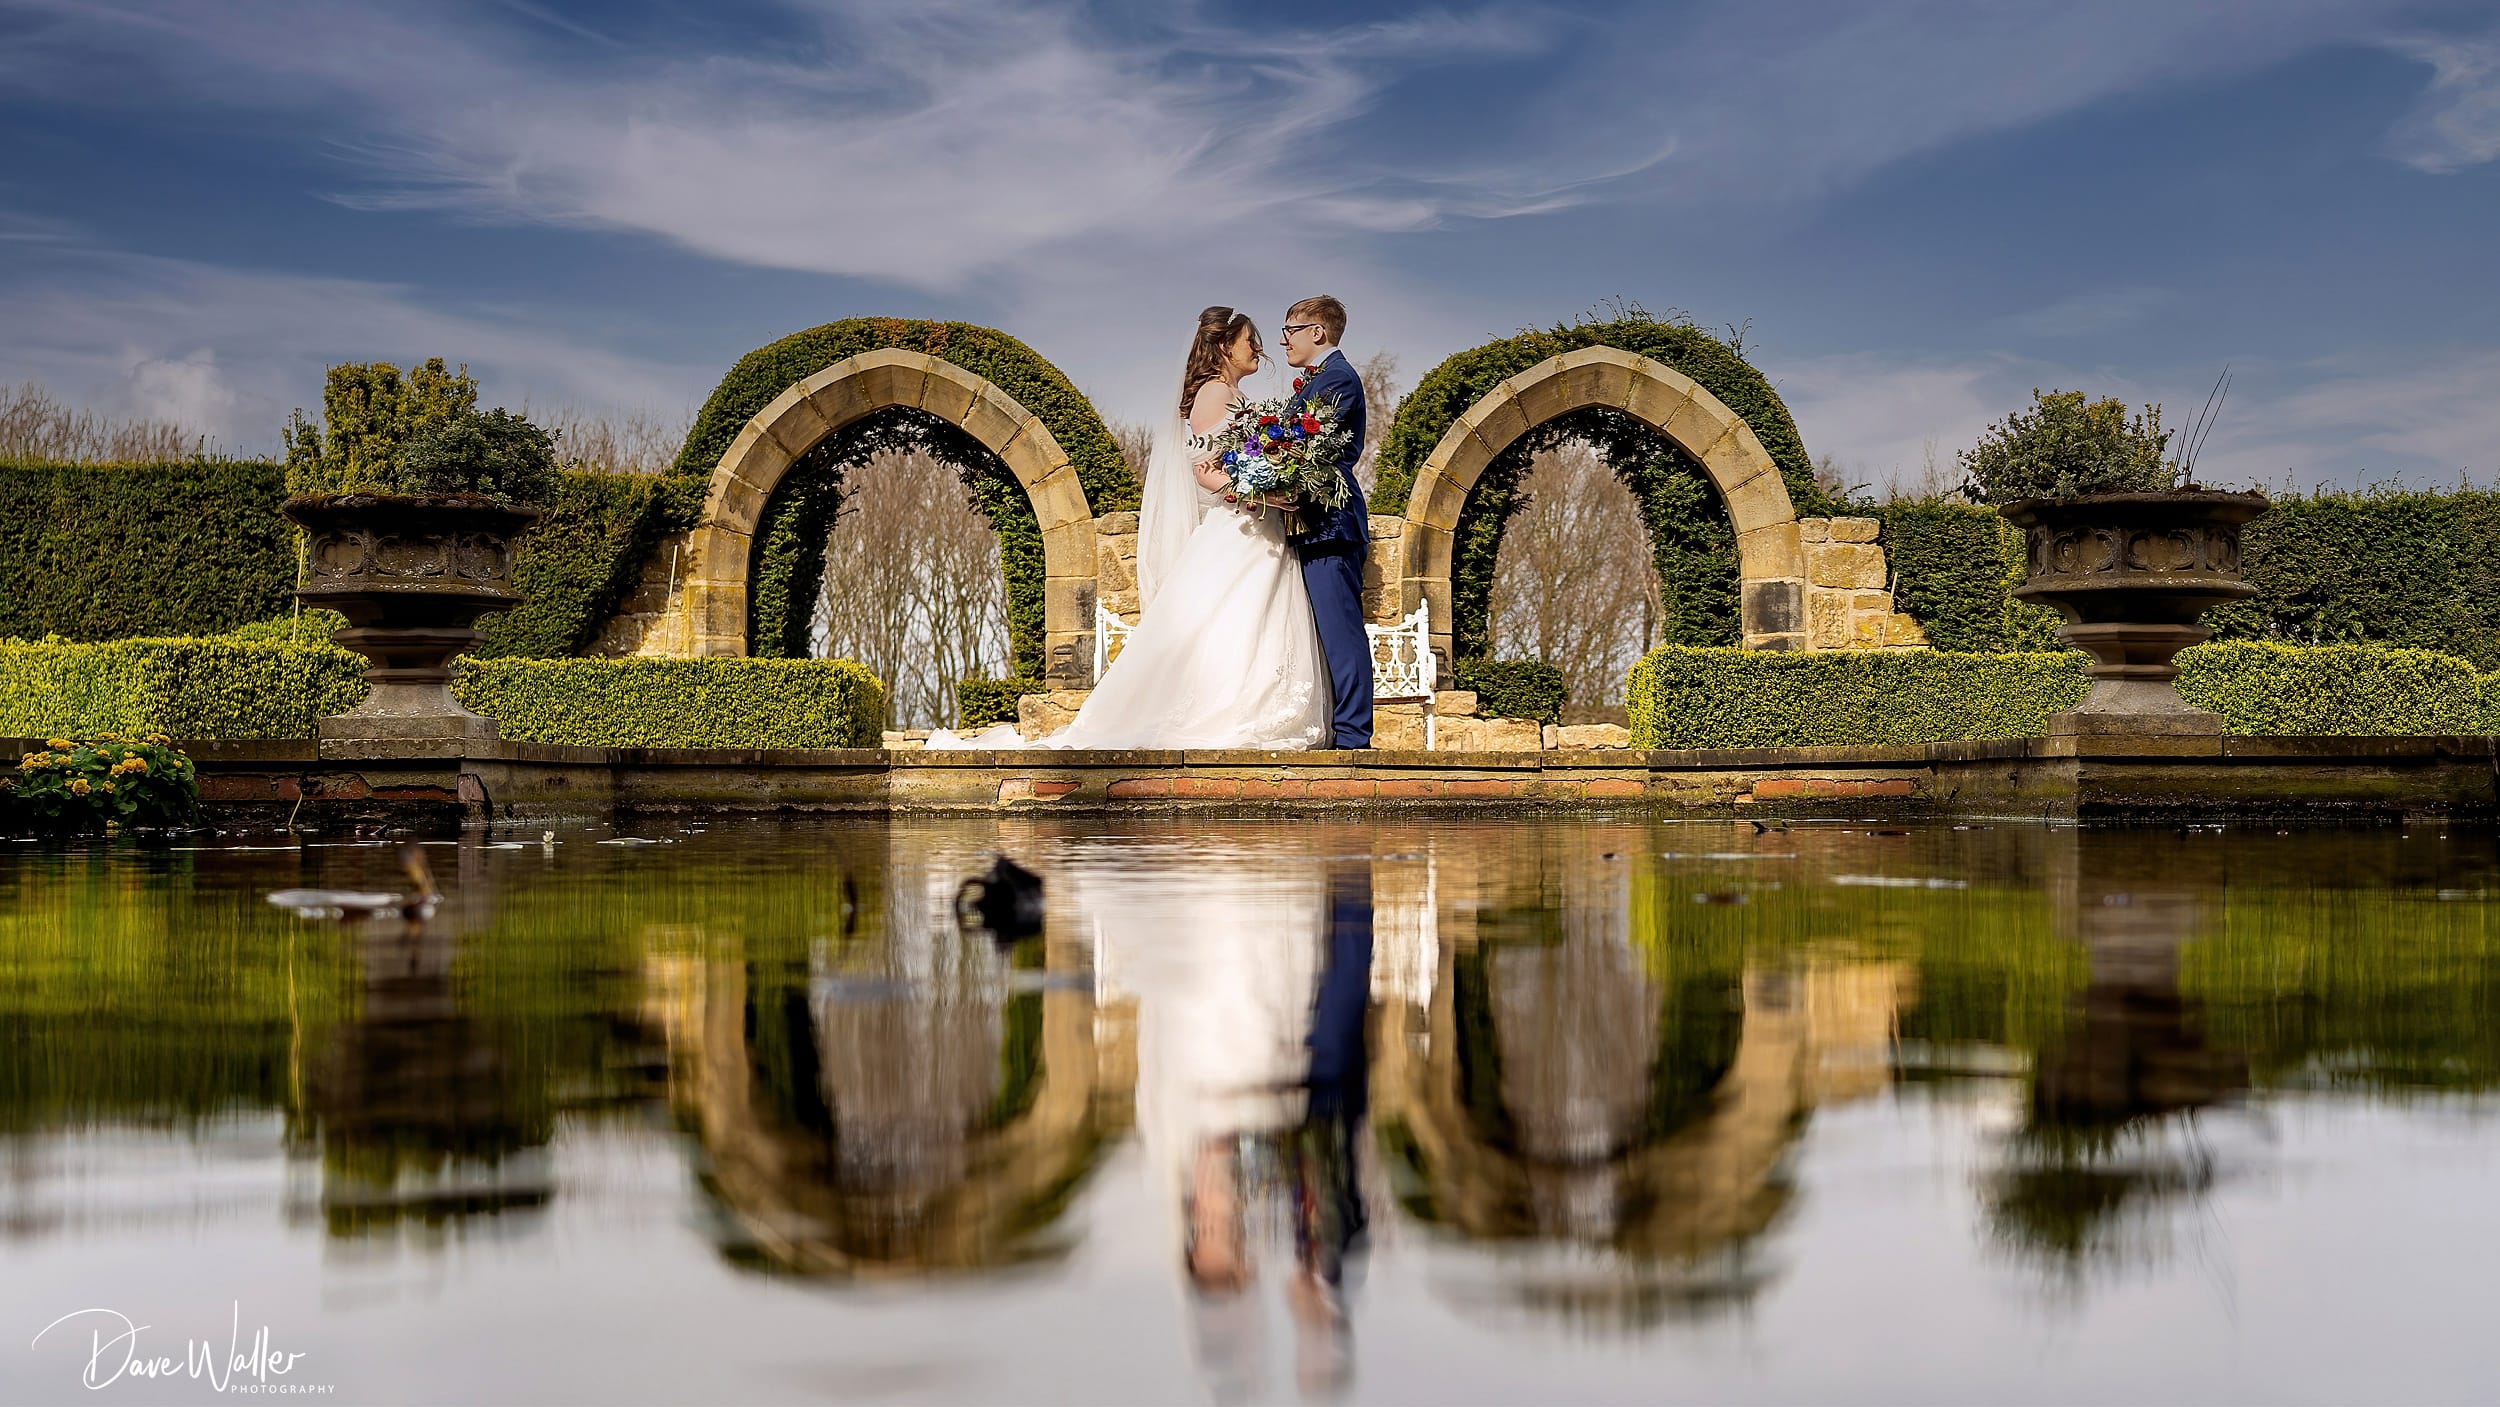 Allerton Castle Wedding Photographer | Allerton Castle Wedding Photography by Dave Waller